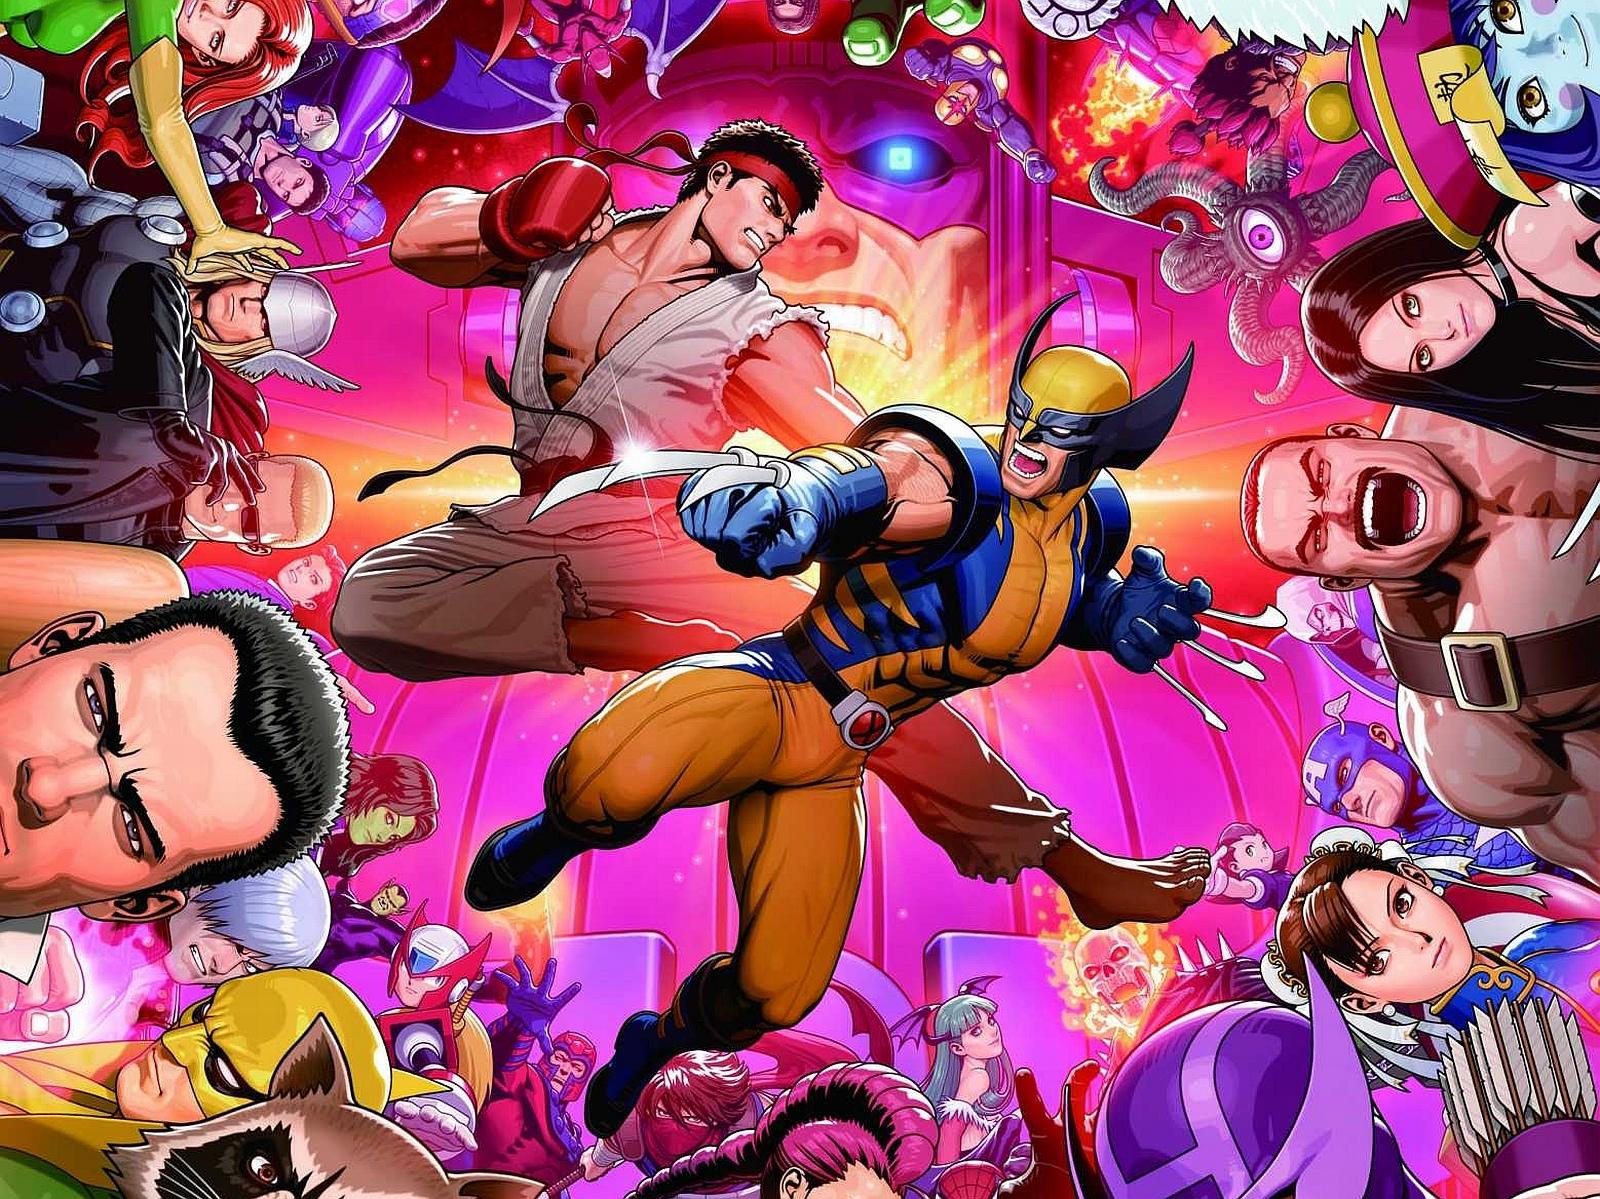 Marvel Vs Capcom at 1024 x 1024 iPad size wallpapers HD quality